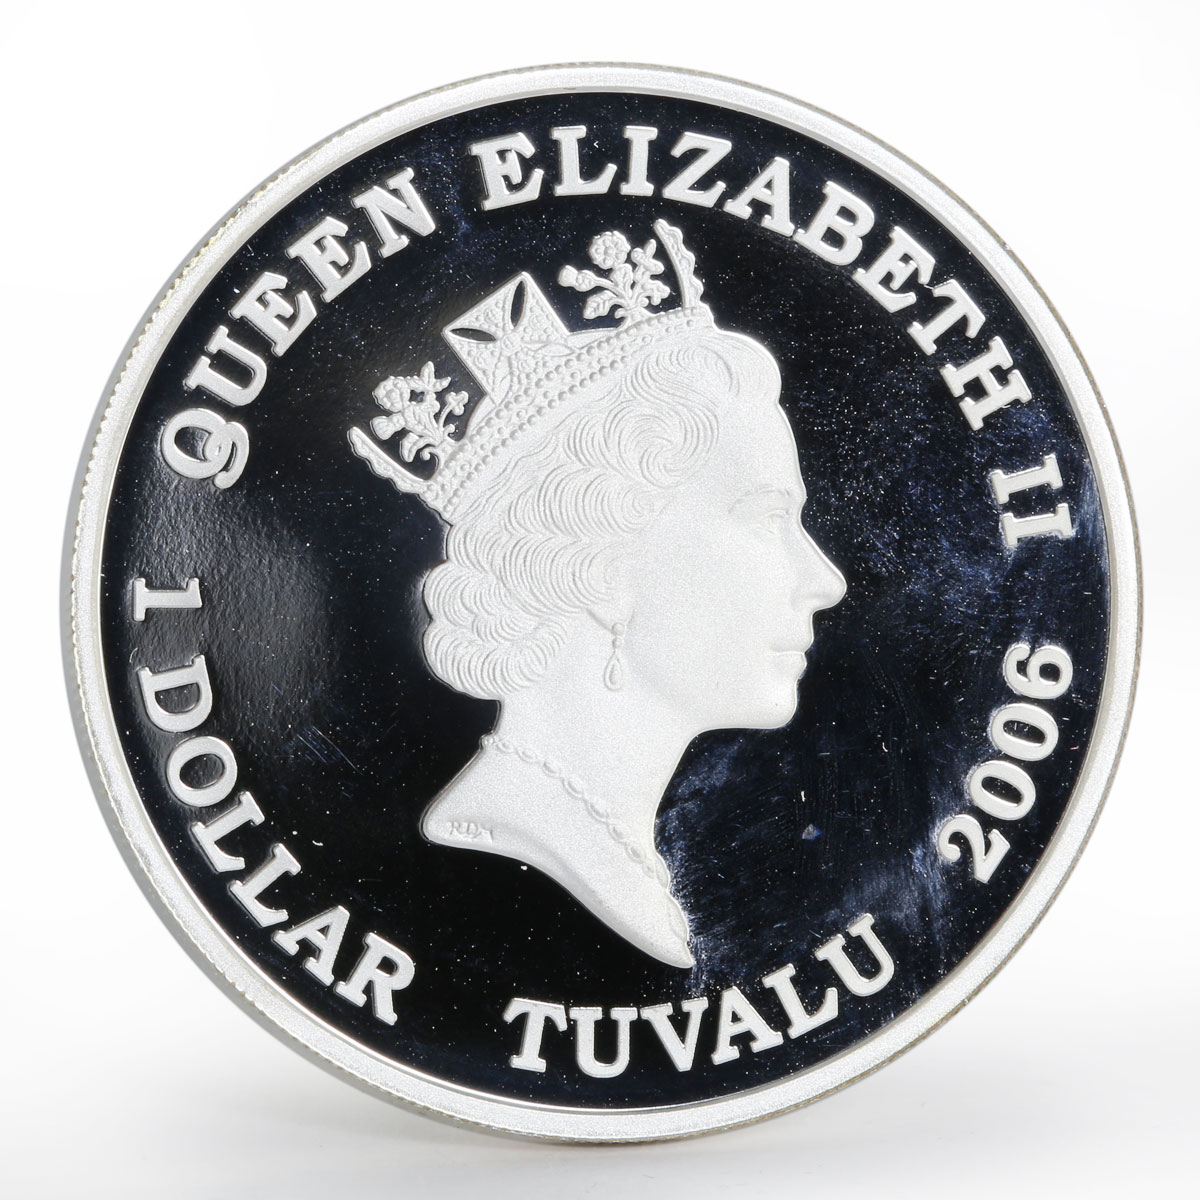 Tuvalu 1 dollar Jaguar E-Type colored silver proof coin 2006